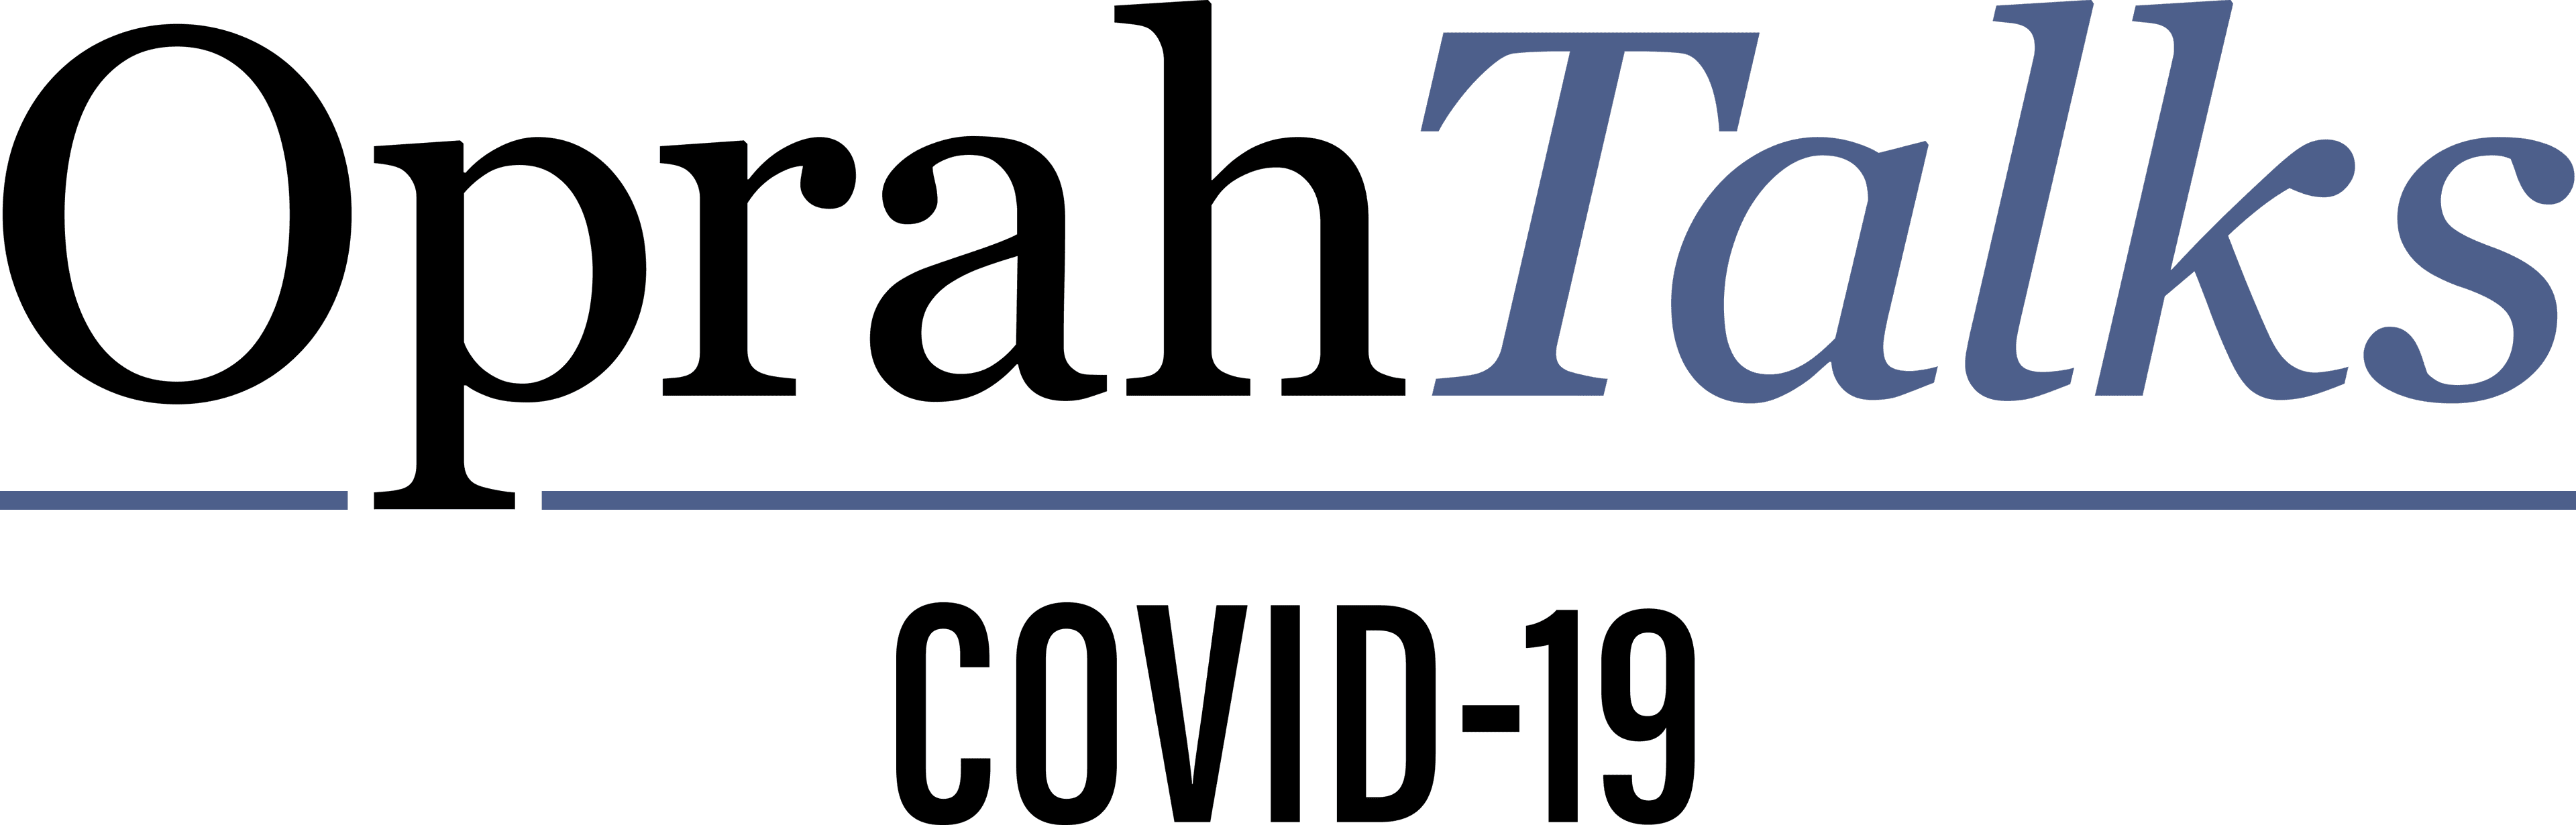 Oprah Talks COVID-19 logo